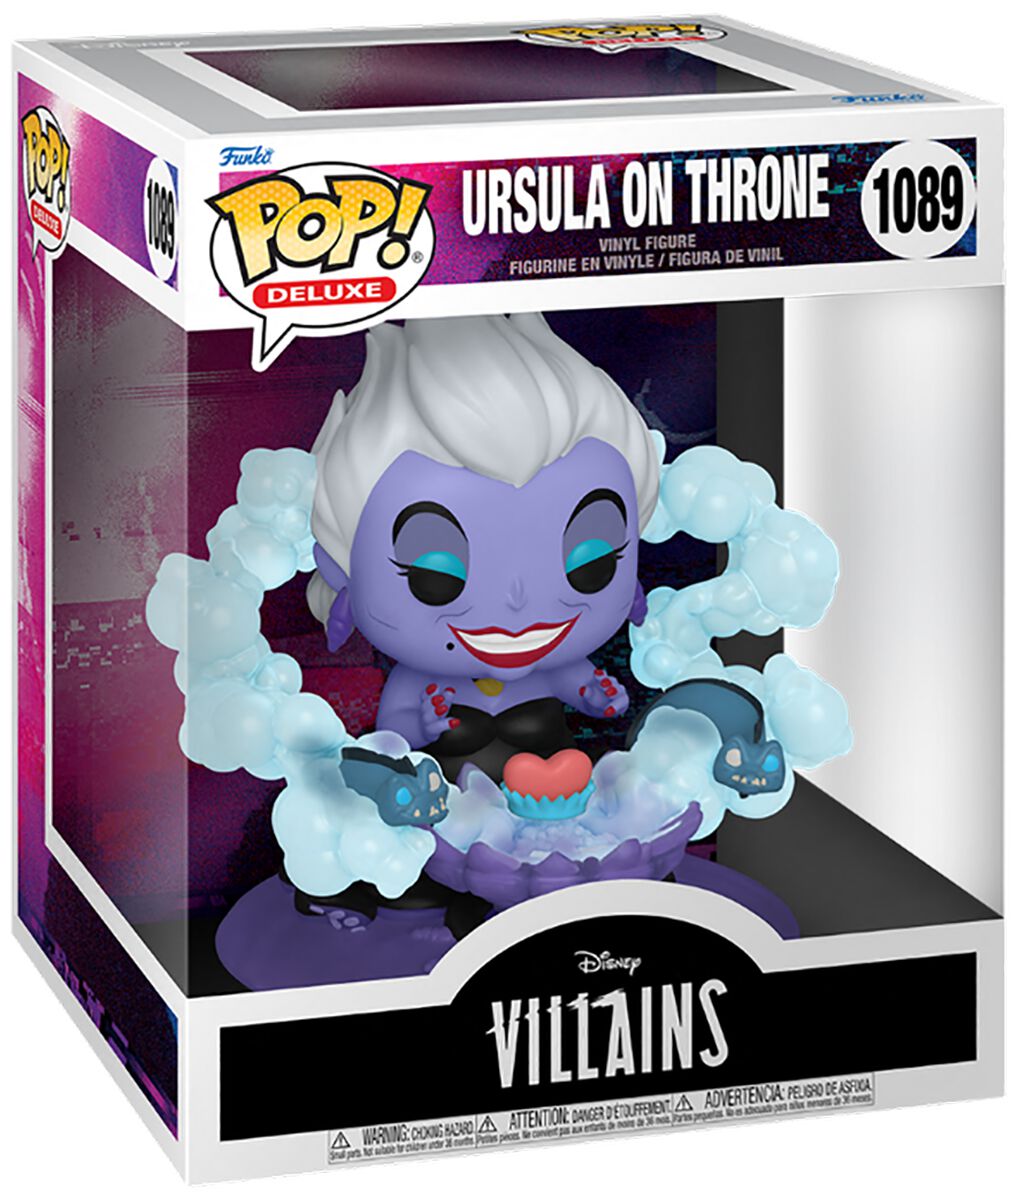 Disney Villains Ursula on throne (Pop! Deluxe) vinyl figurine no. 1089 Funko Pop! multicolor